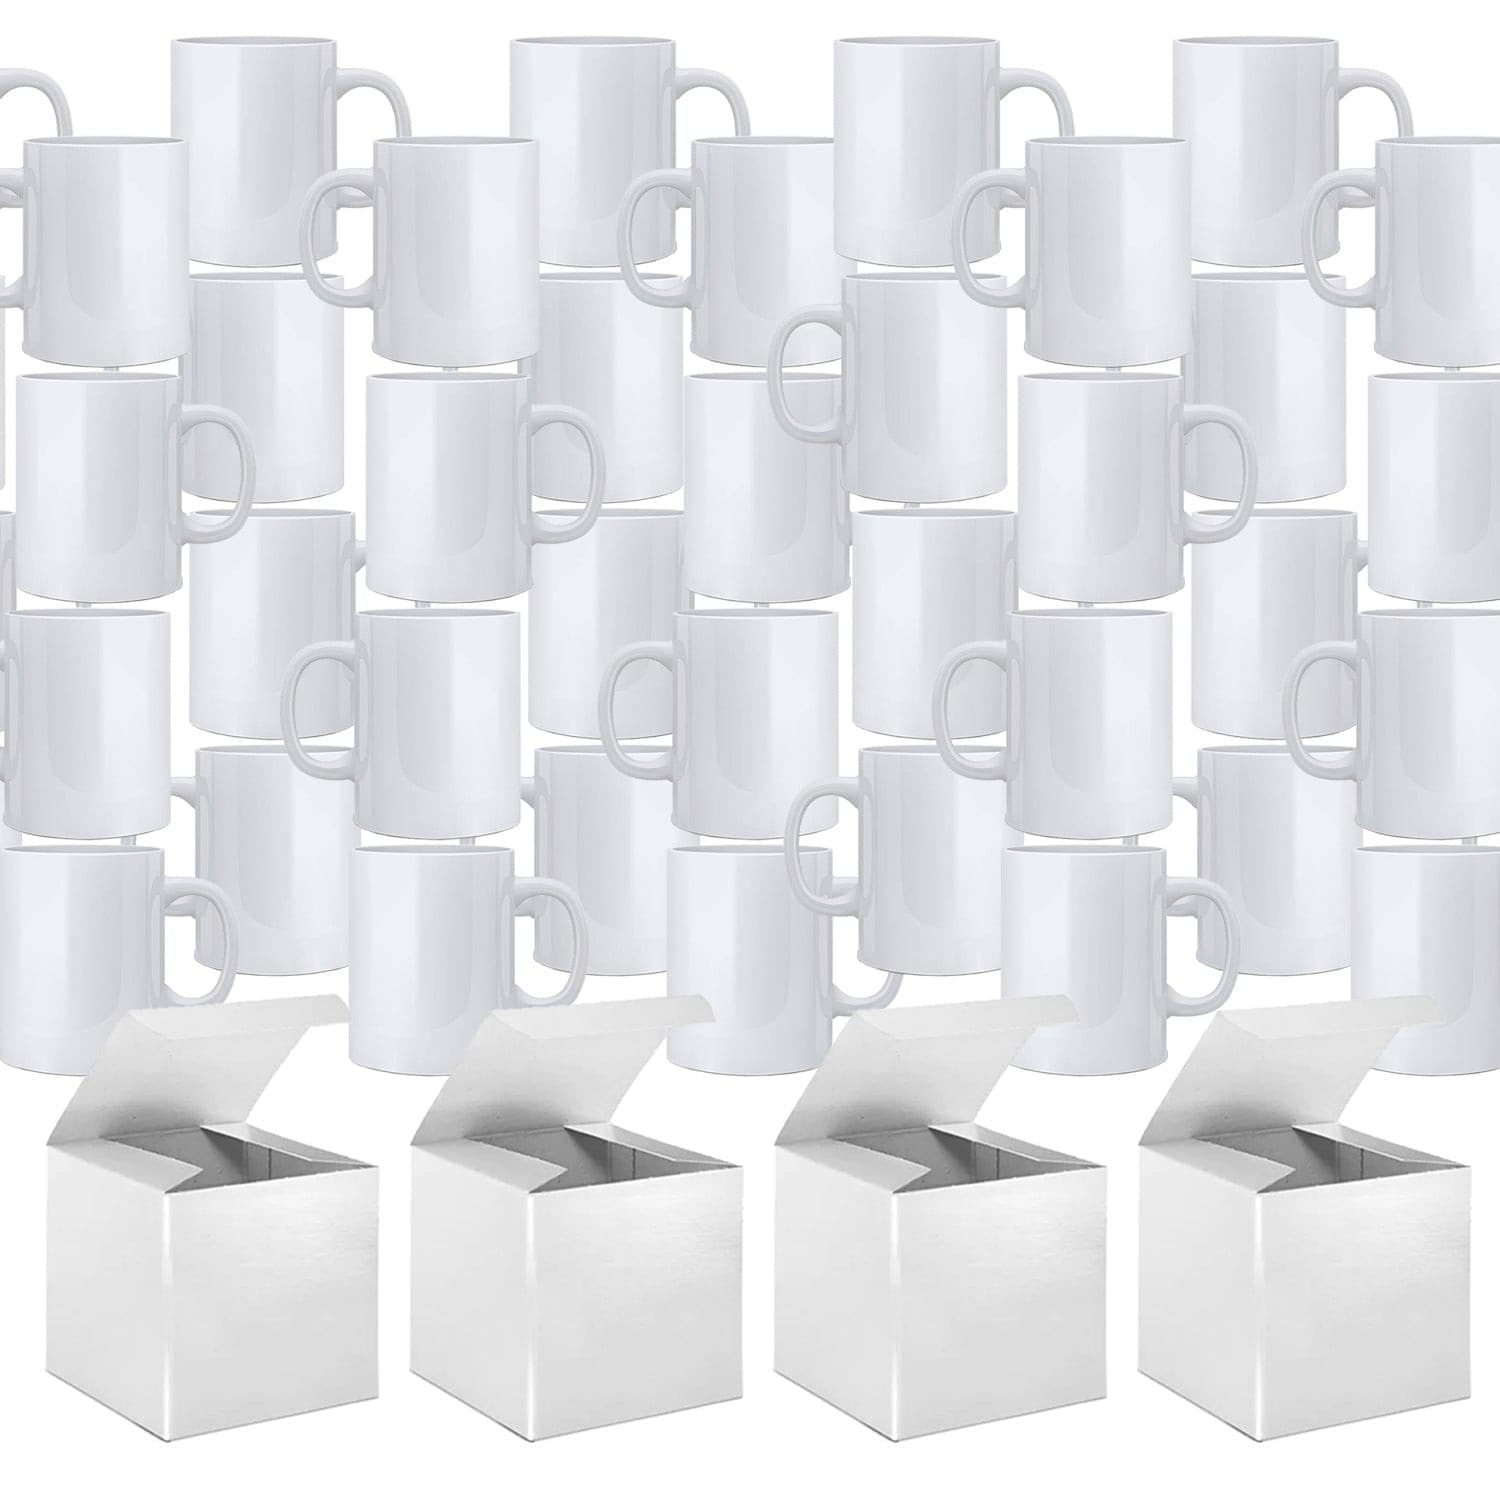 Wholesale Deal: Set of 36 - 11oz Sublimation White Coffee Mugs - Mugsie